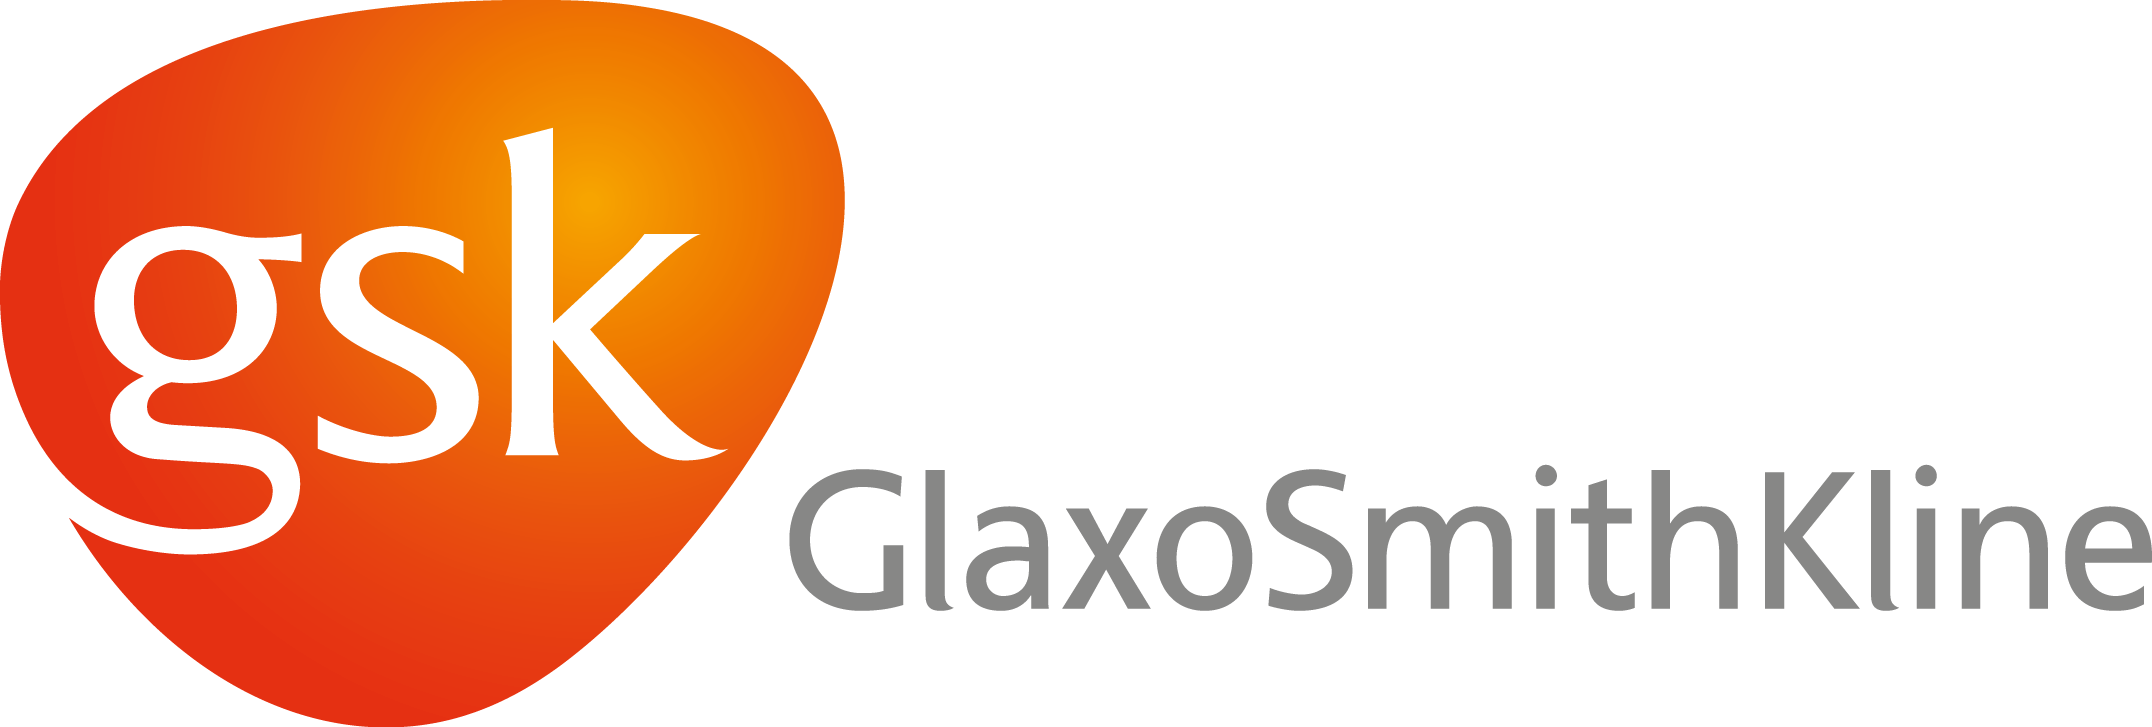 GSK Logo [GlaxoSmithKline] Download Vector